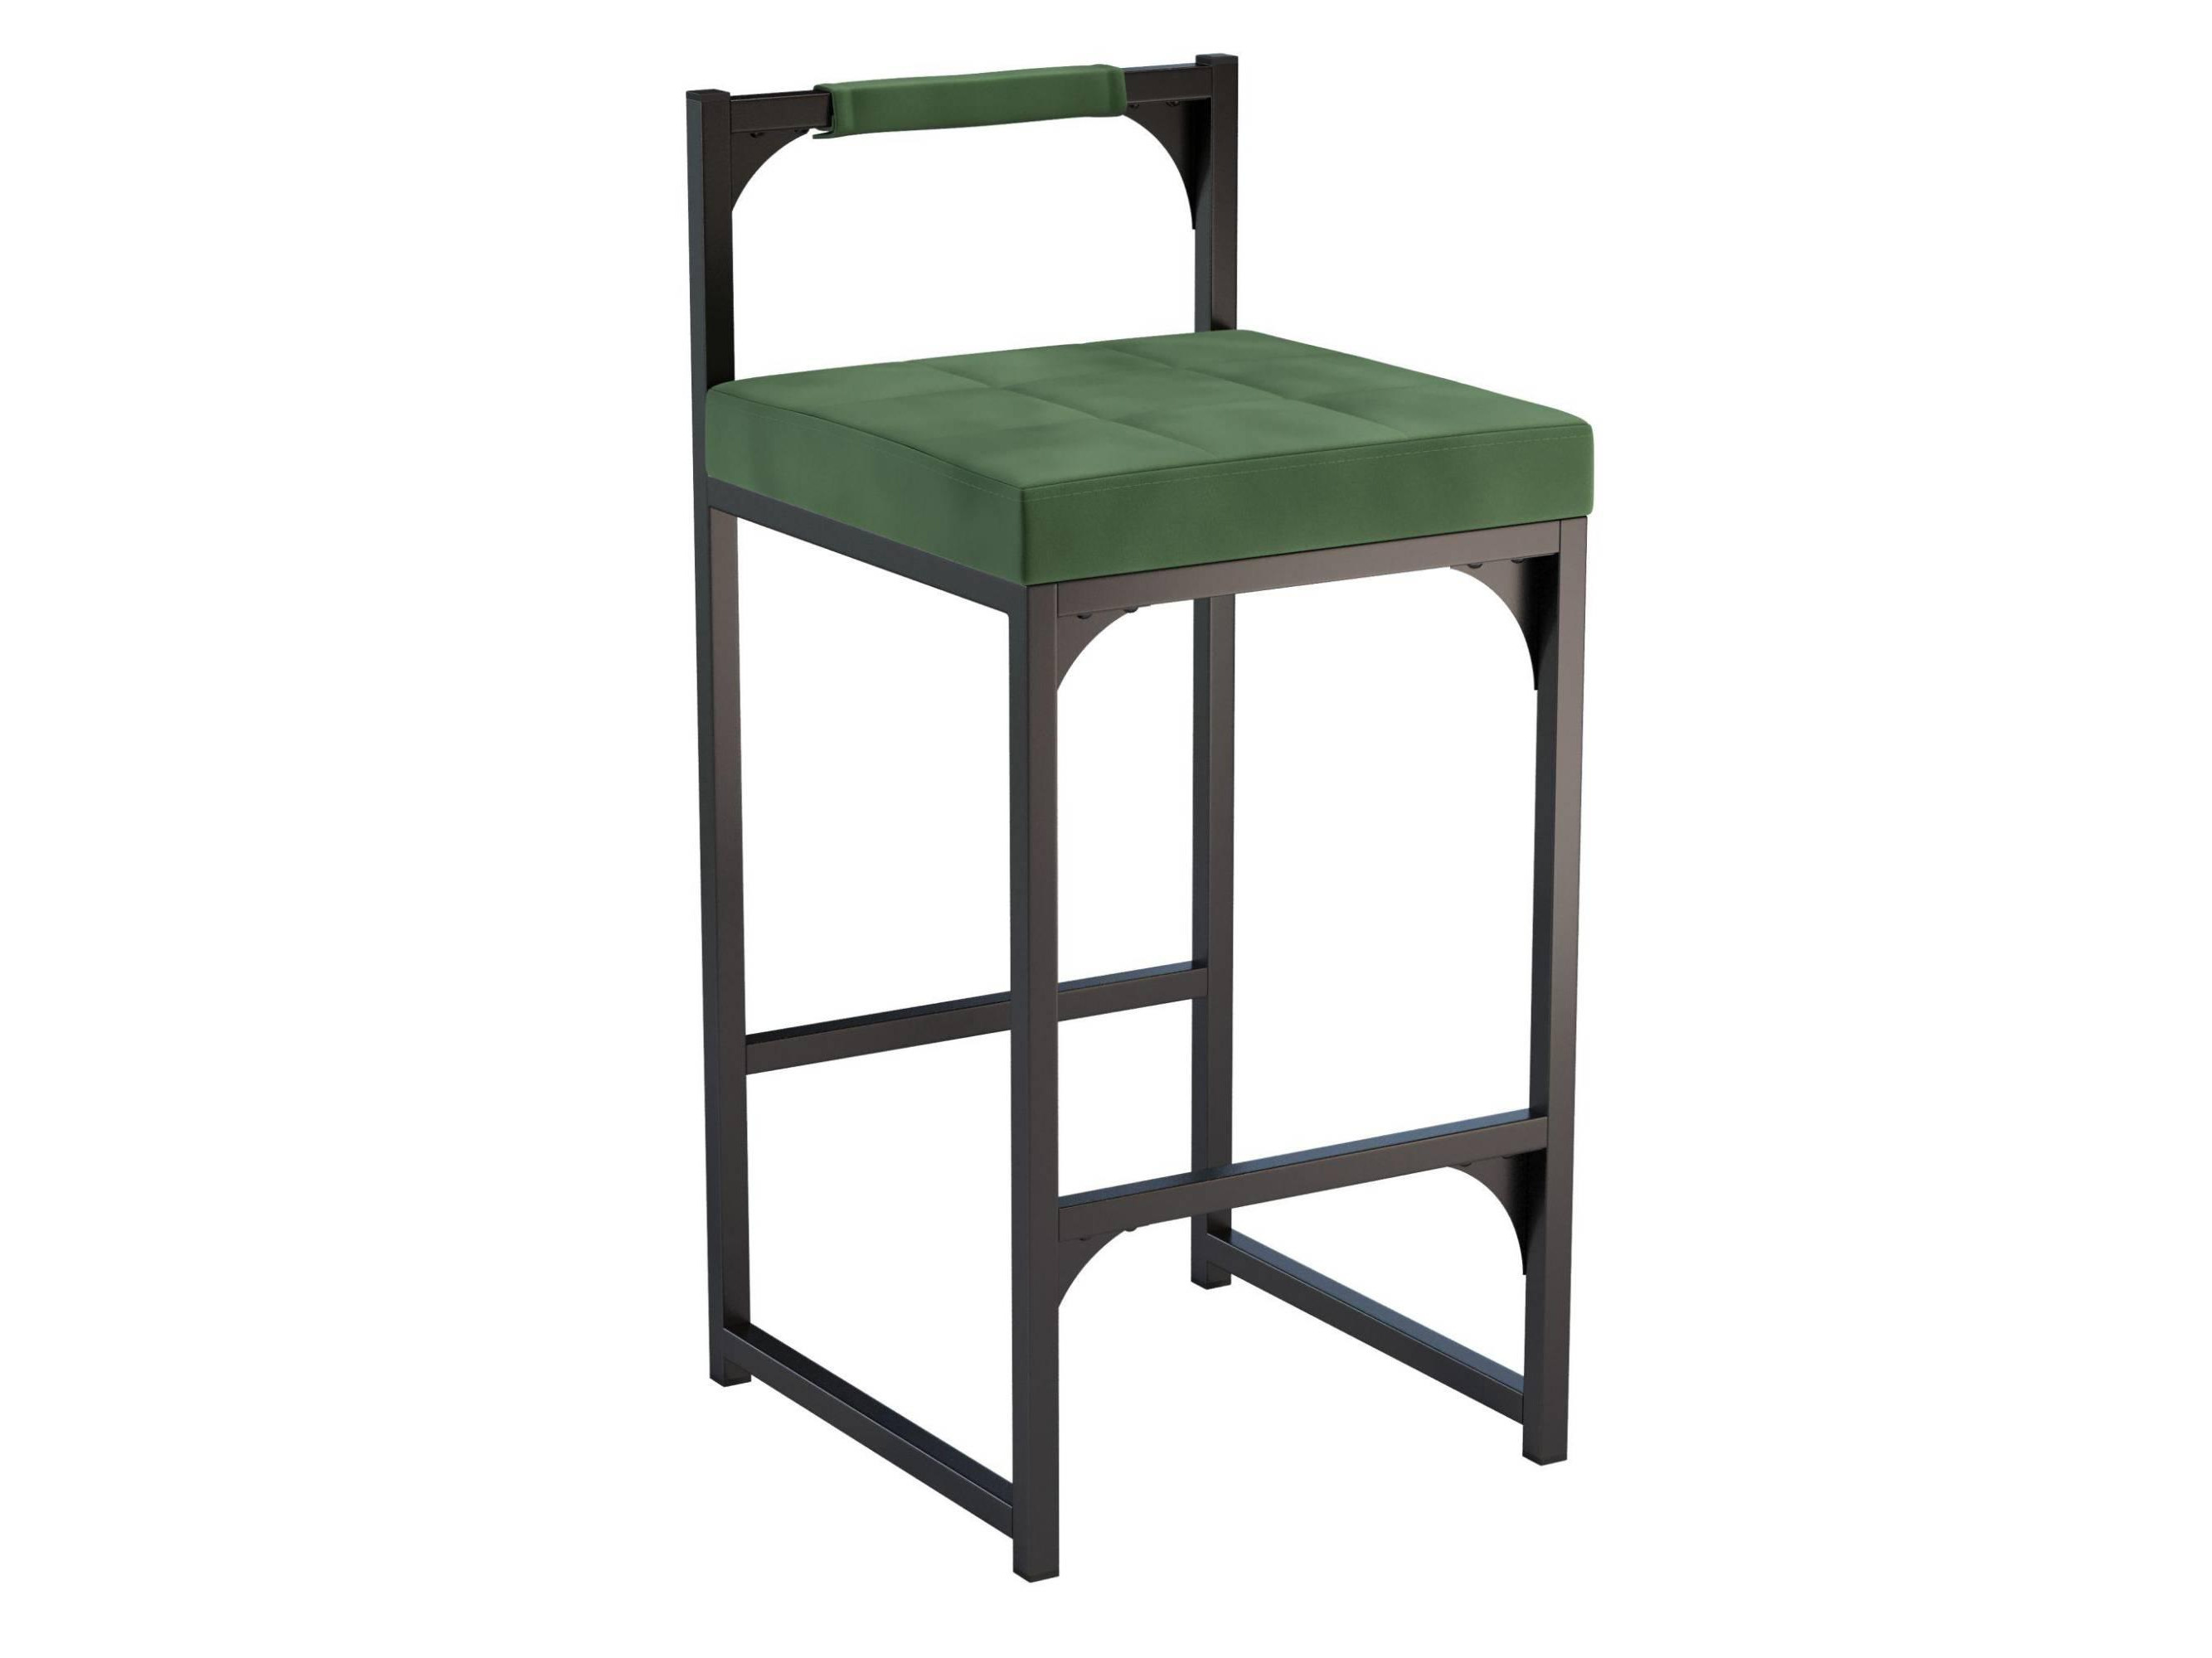 Кантри / стул барный (велюр киото олива/ металл черный) Черный, Металл orion зеленый барный стул зеленый пластик хромированный металл